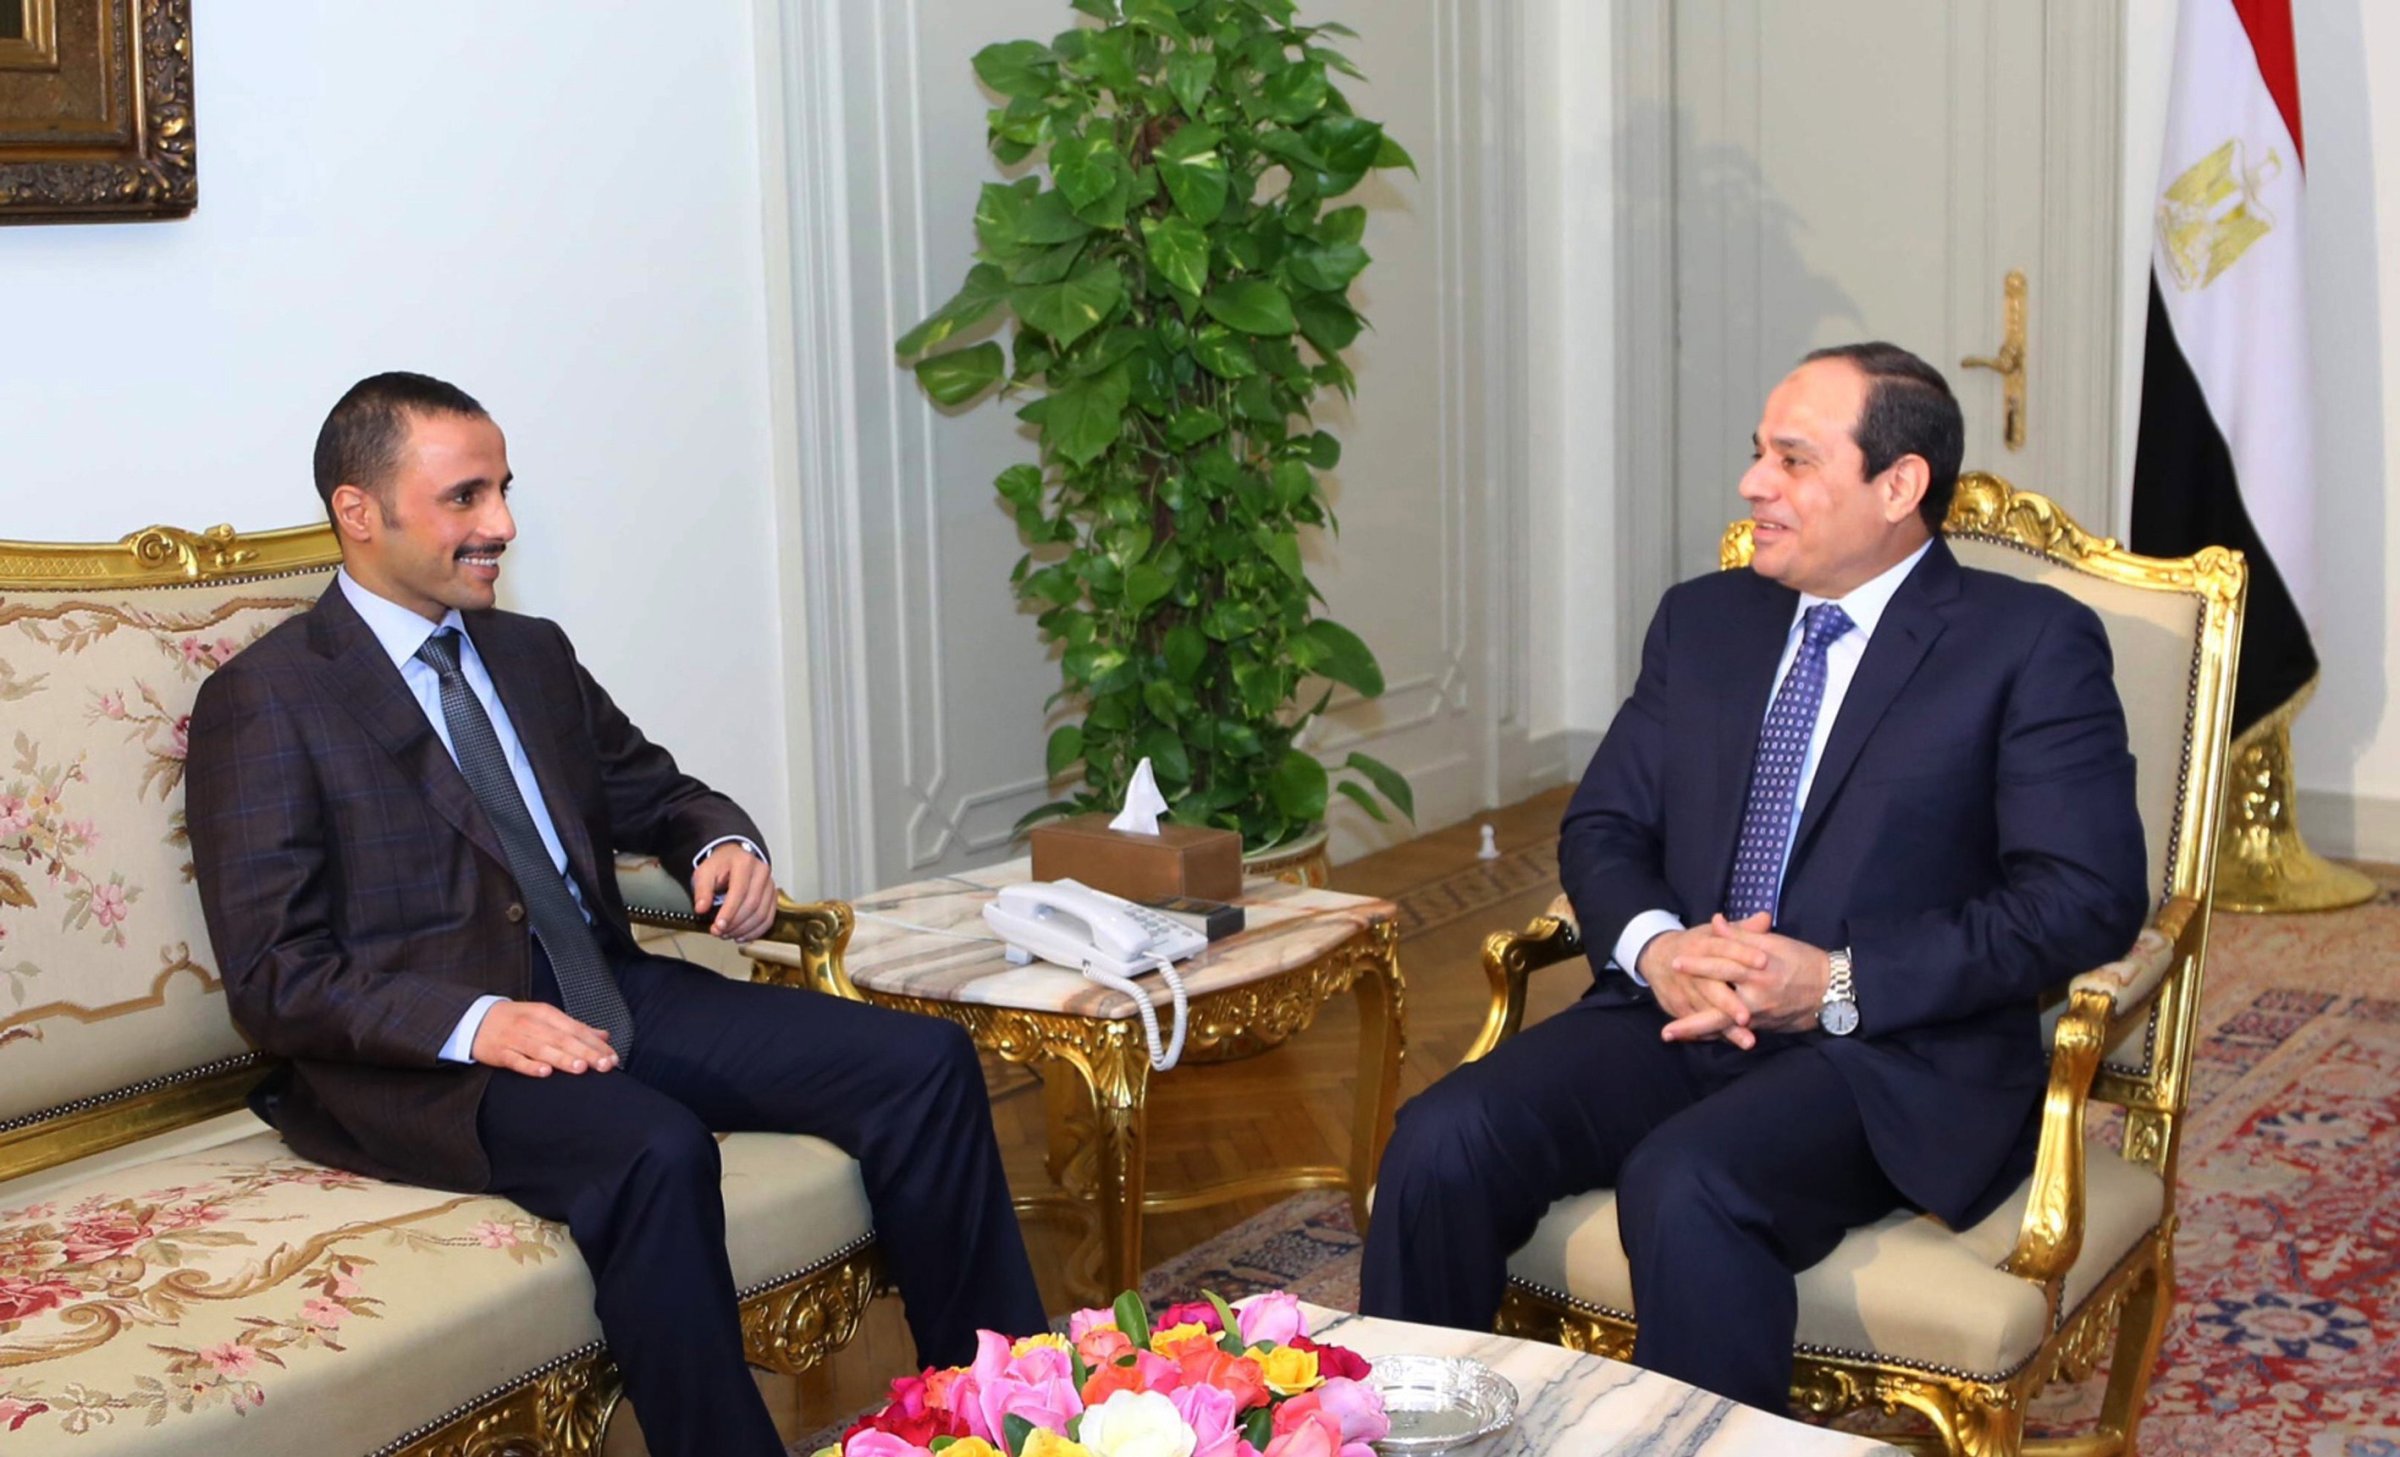 From left: Kuwait's parliamentary speaker Merzuk Ali el-Ganim meets with Egypt's President Abdel Fattah el Sisi in Cairo, Egypt on Dec. 27, 2014.